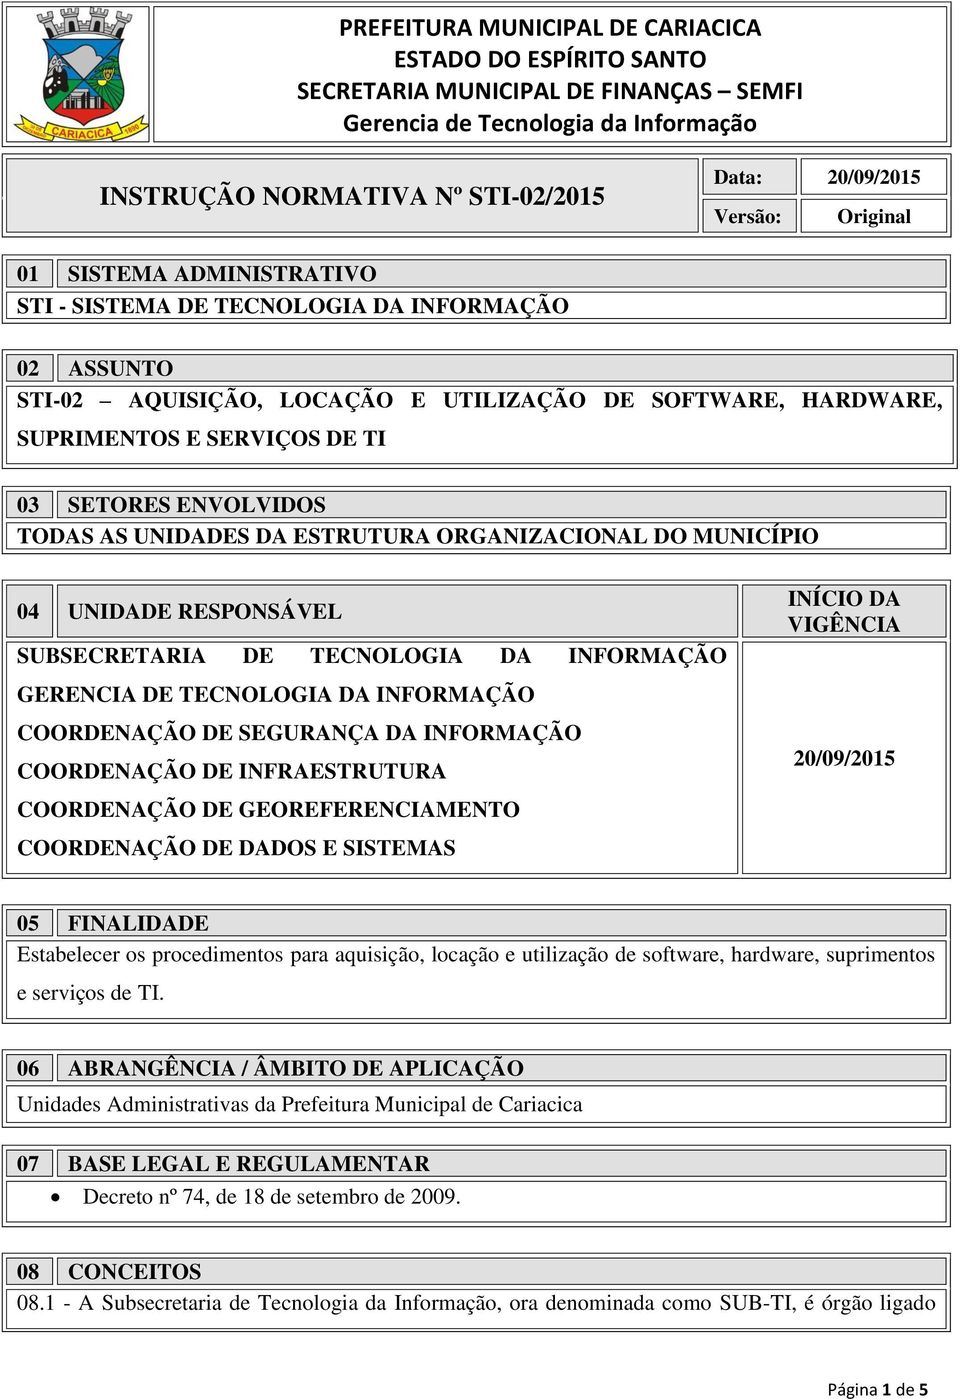 VIGÊNCIA GERENCIA DE TECNOLOGIA DA INFORMAÇÃO COORDENAÇÃO DE SEGURANÇA DA INFORMAÇÃO COORDENAÇÃO DE INFRAESTRUTURA 20/09/2015 COORDENAÇÃO DE GEOREFERENCIAMENTO COORDENAÇÃO DE DADOS E SISTEMAS 05